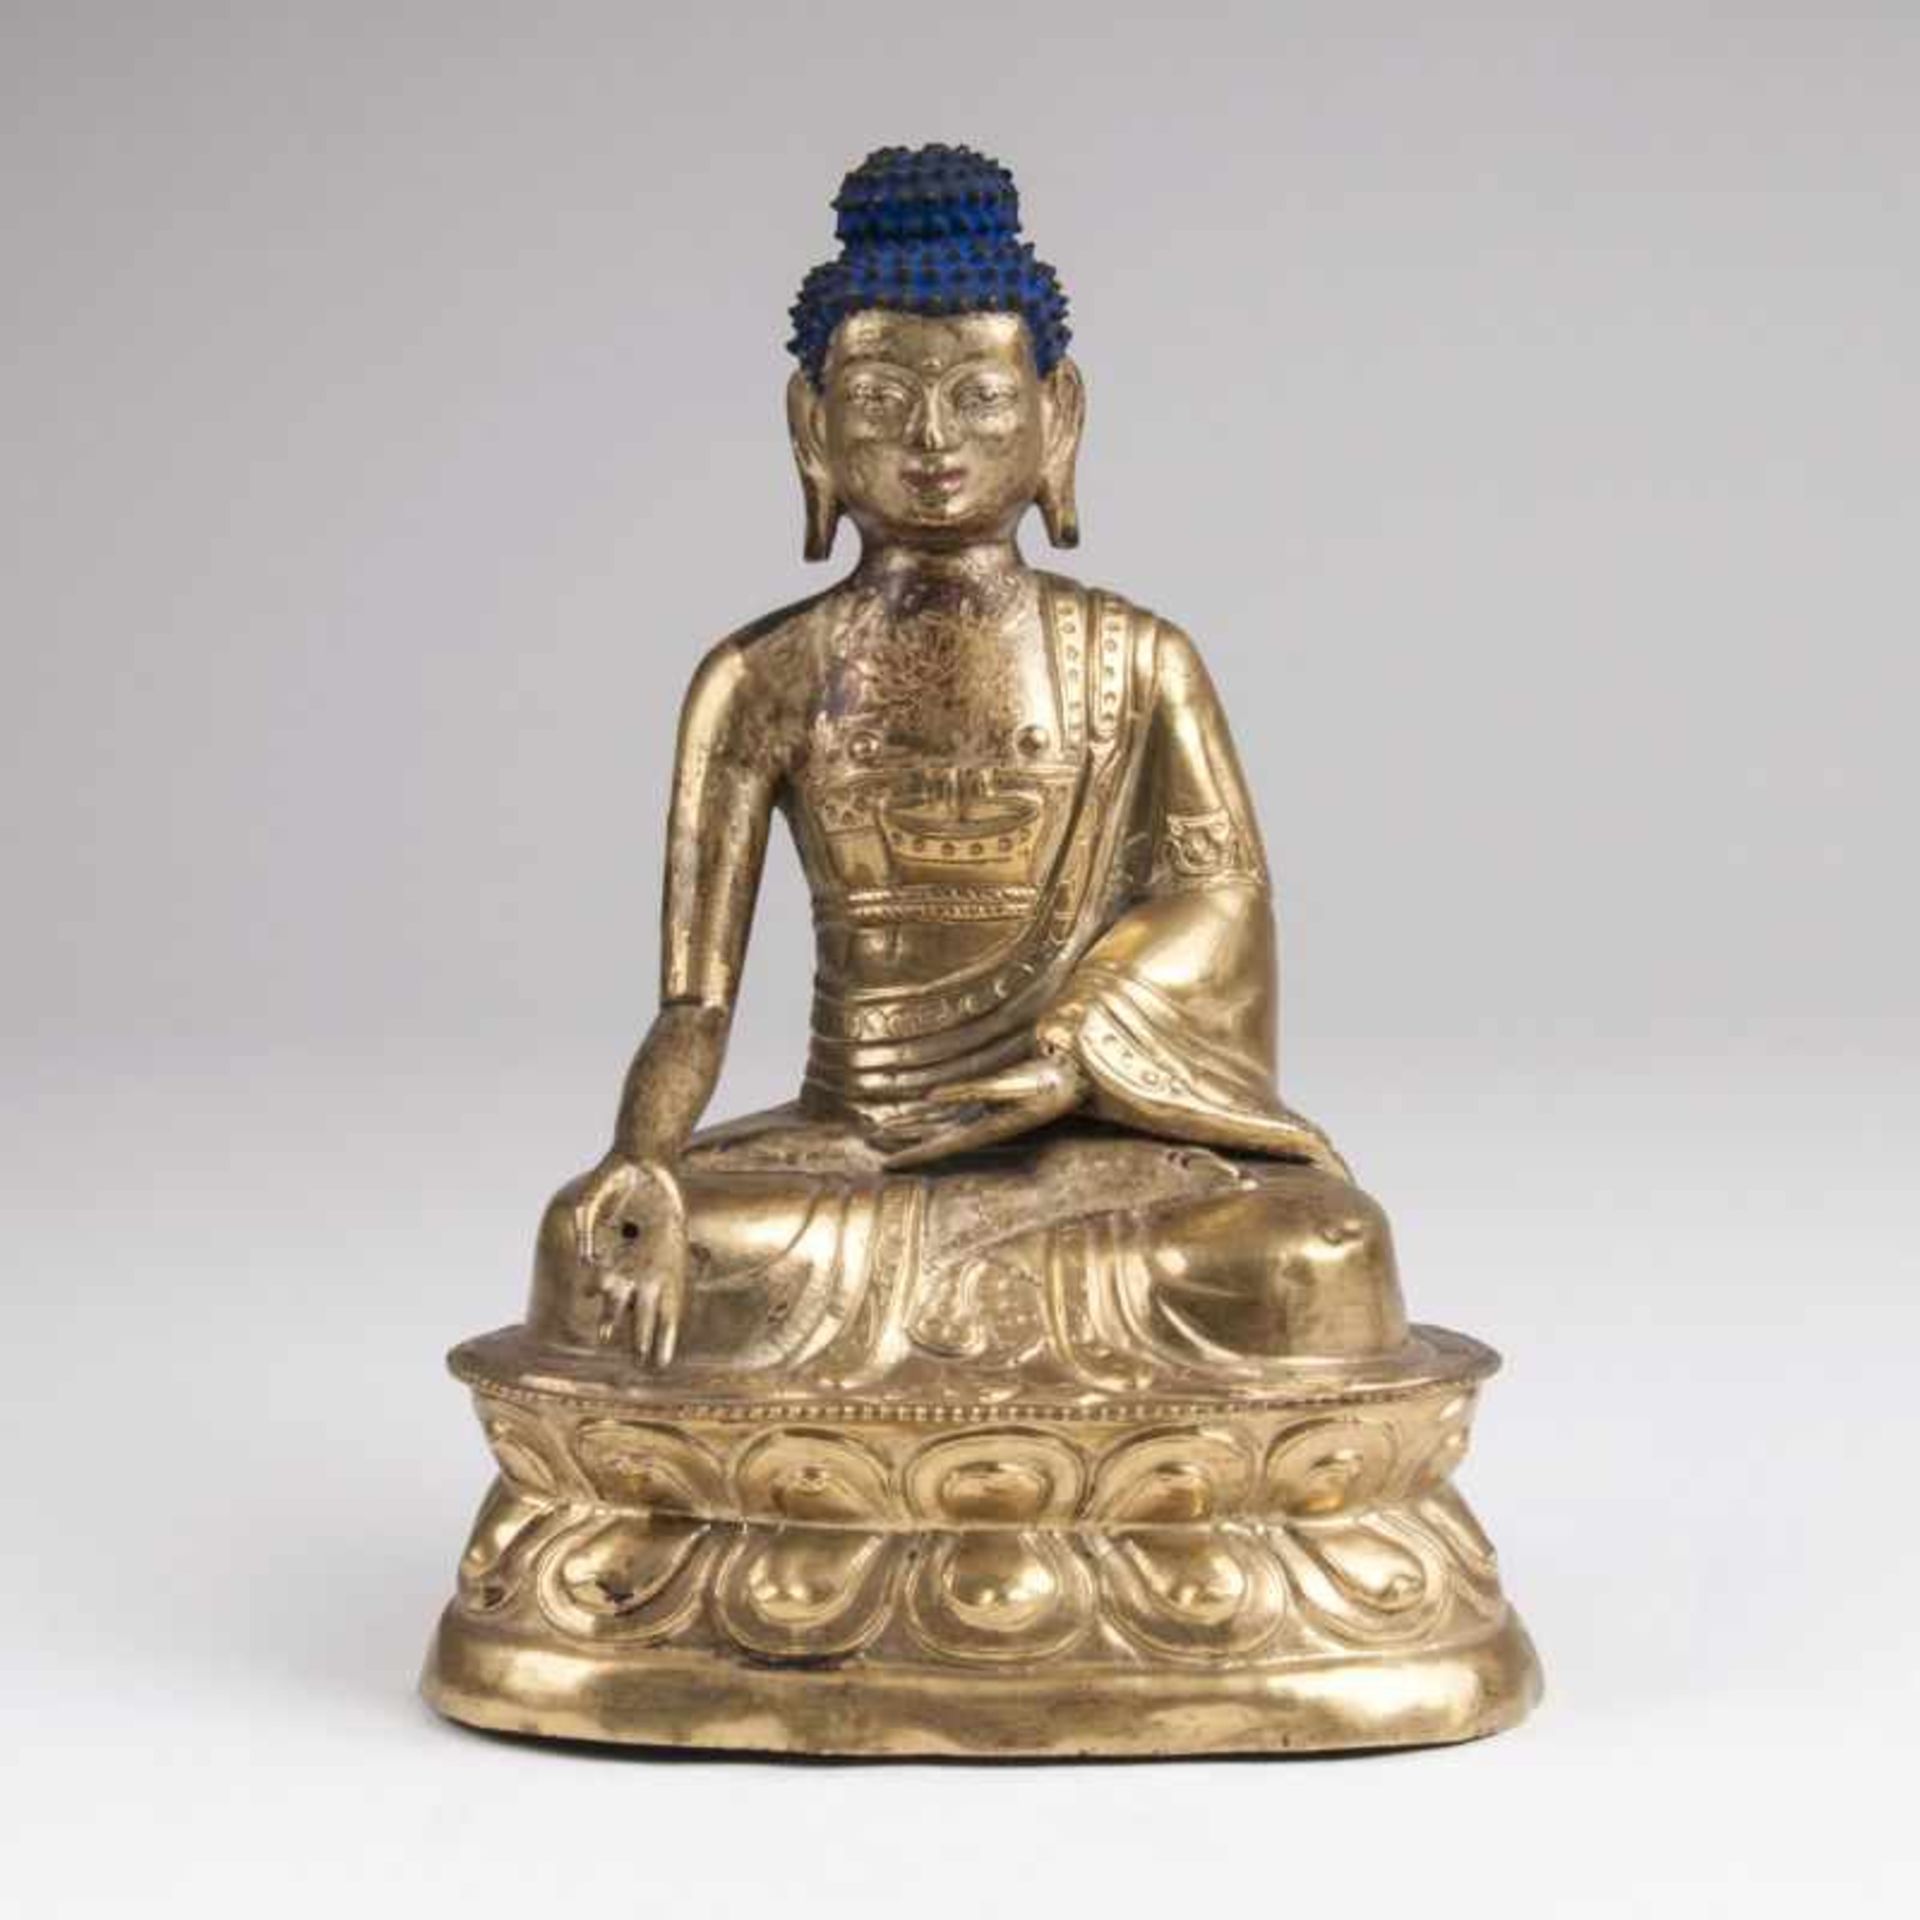 Skulptur 'Medizin-Buddha' Bhaisajyaguru Tibet, 18./19. Jh. Kupferlegierung, getrieben, Reste